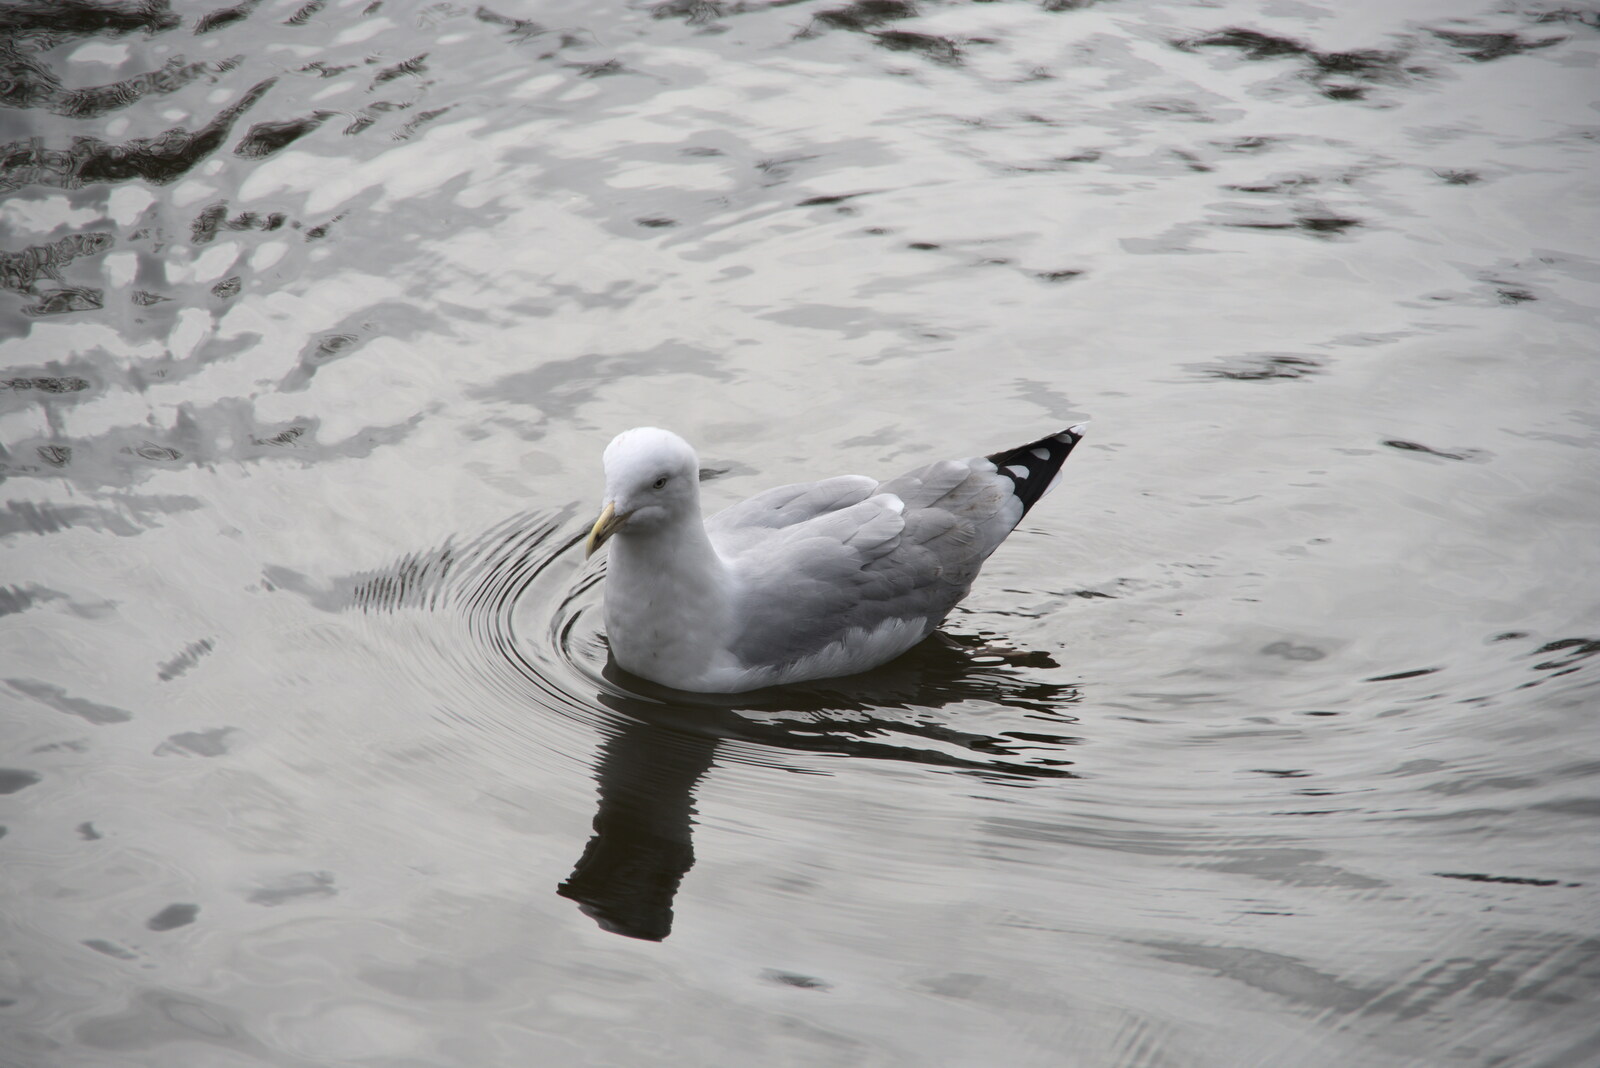 The Dead Zoo, Dublin, Ireland - 17th February 2023: A Common Gull floats around on the pond